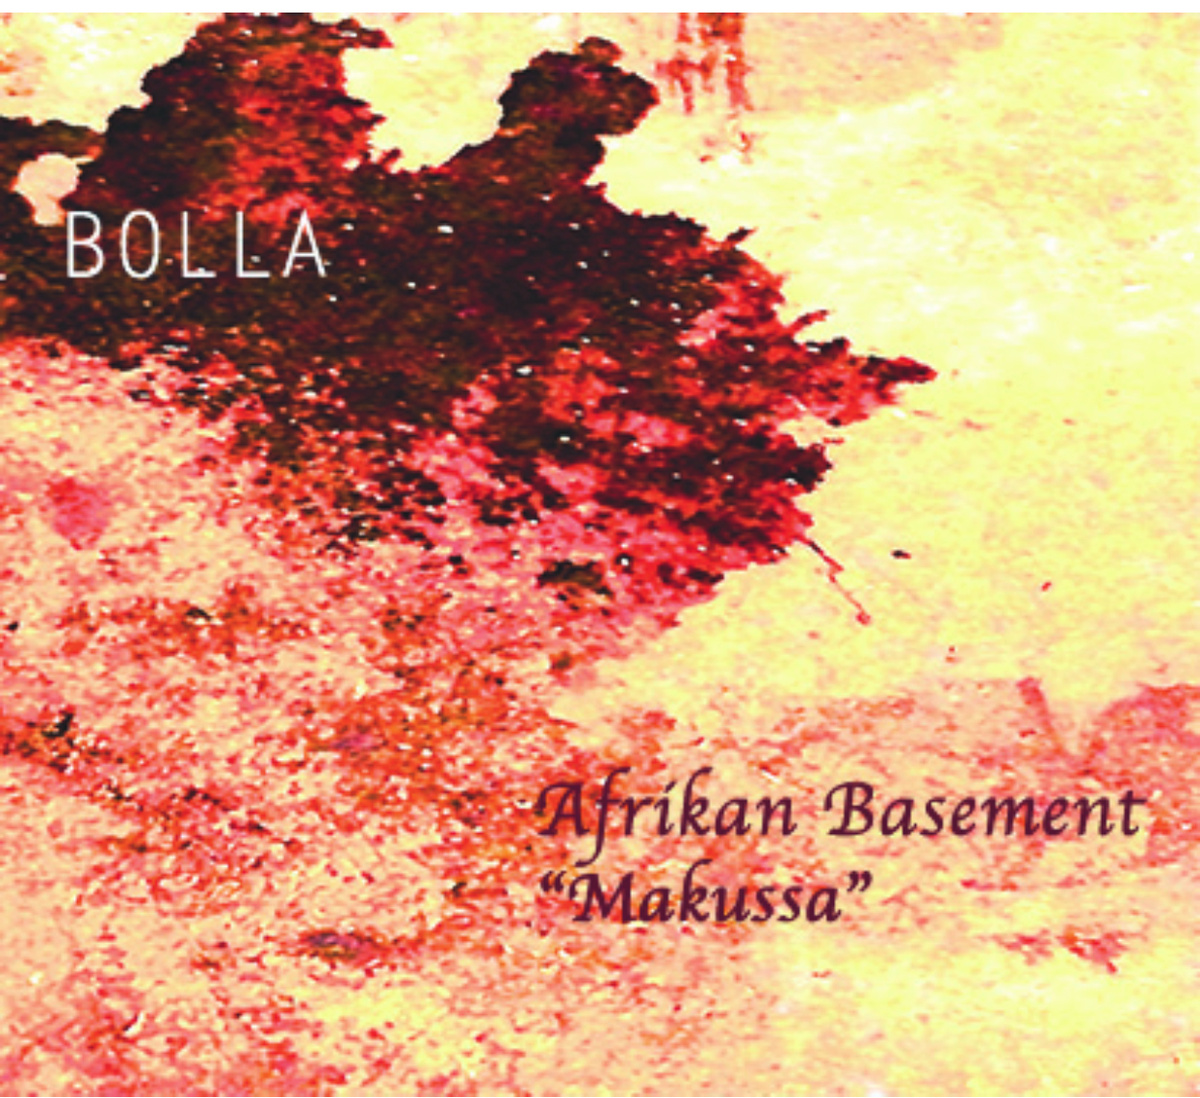 Bolla - Afrikan Basement - Makussa